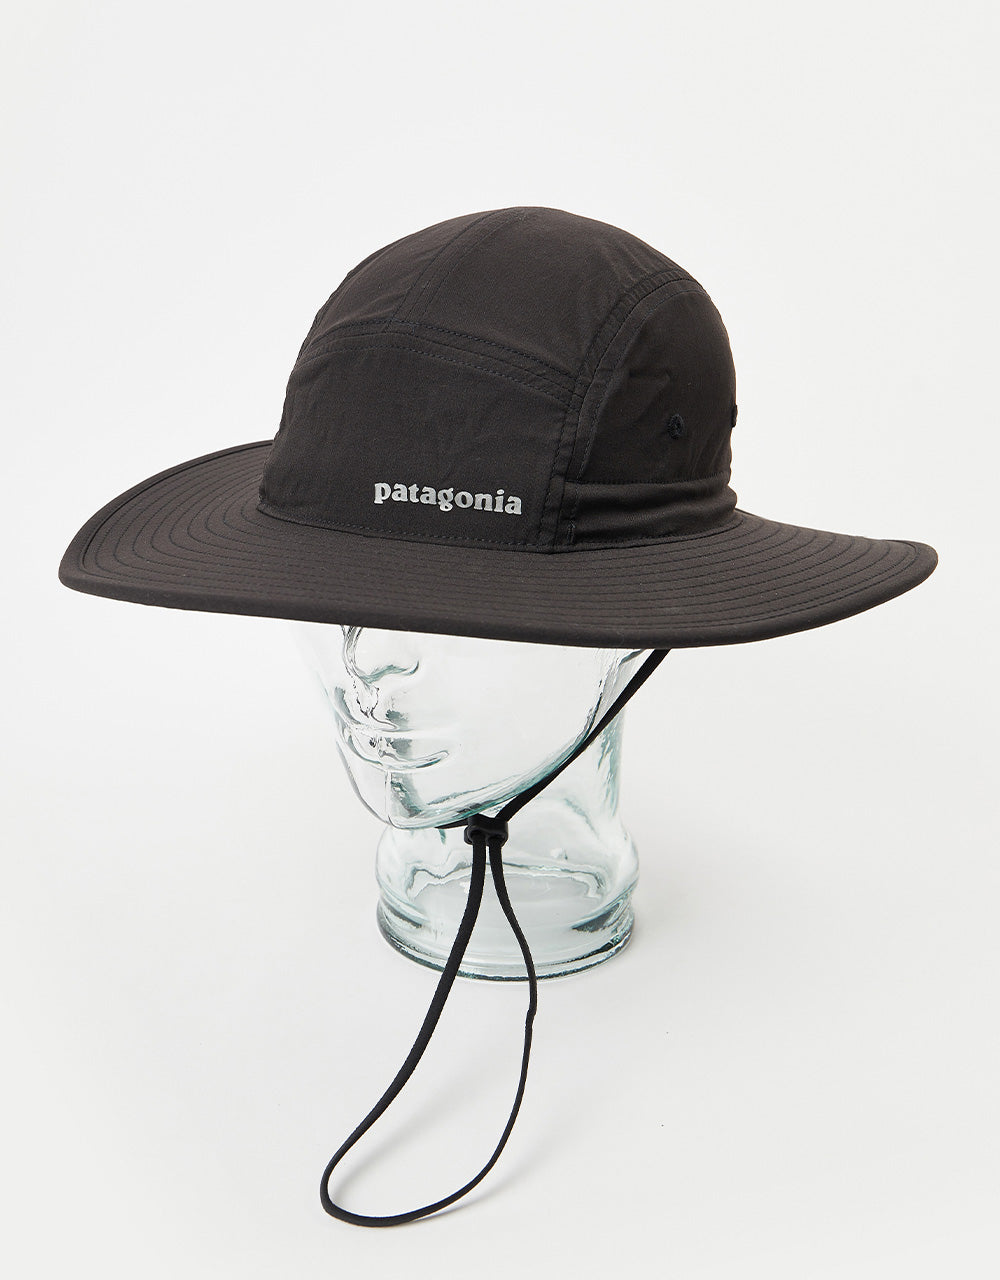 Patagonia Quandary Brimmer Bucket Hat - Black